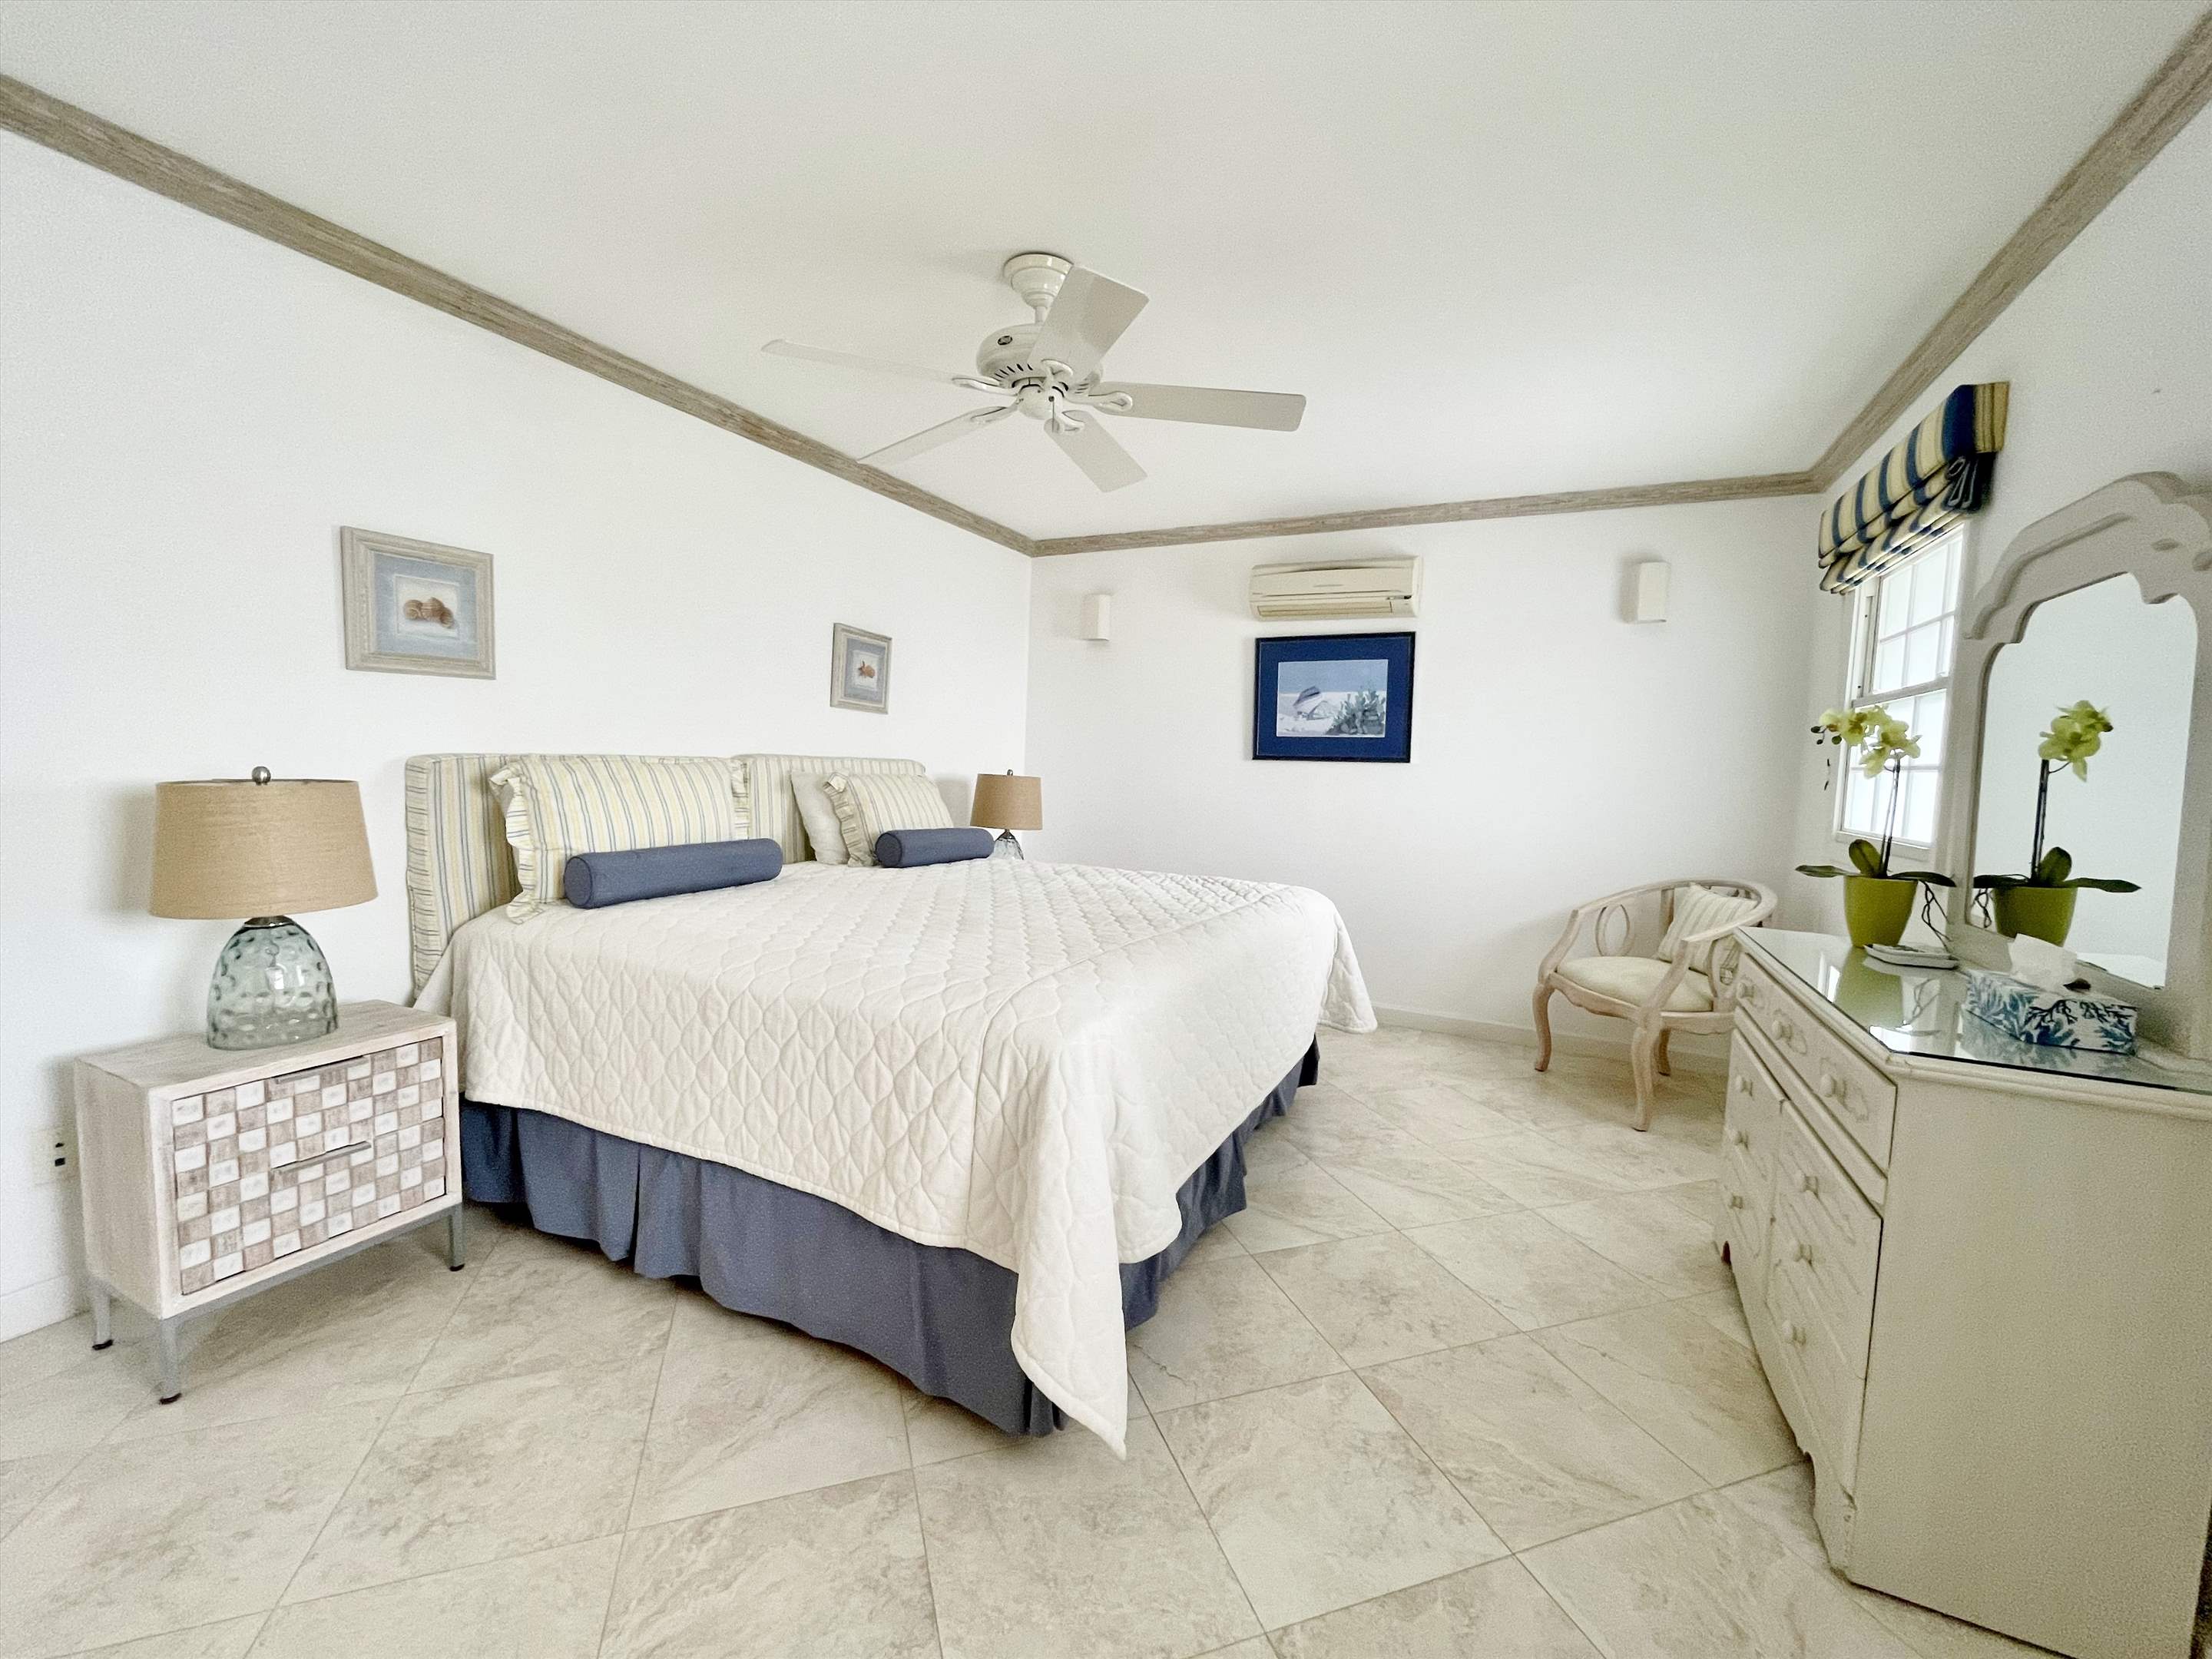 Villas on the Beach 403, 3 bedroom, 3 bedroom apartment in St. James & West Coast, Barbados Photo #13